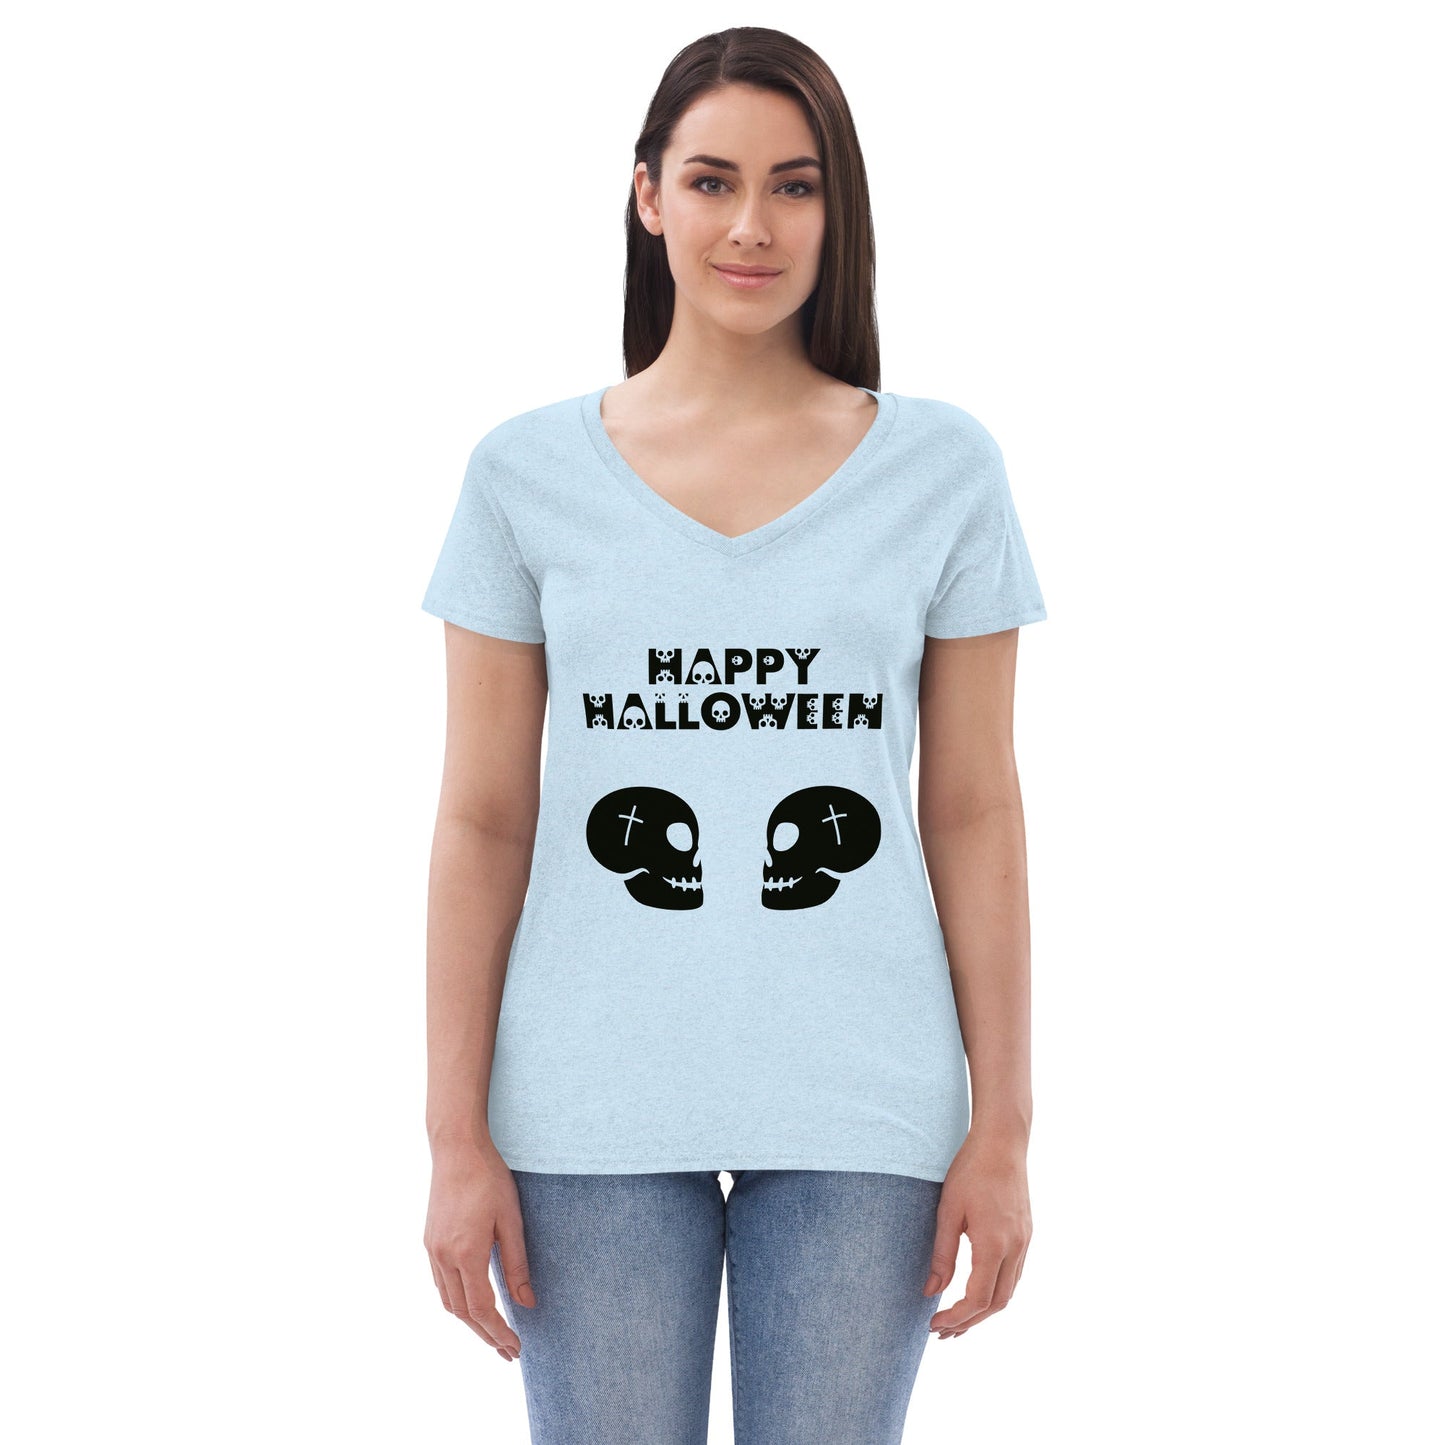 Happy Halloween in Black Skull Font with 2 Facing Skulls Women’s recycled v-neck t-shirt - Lizard Vigilante